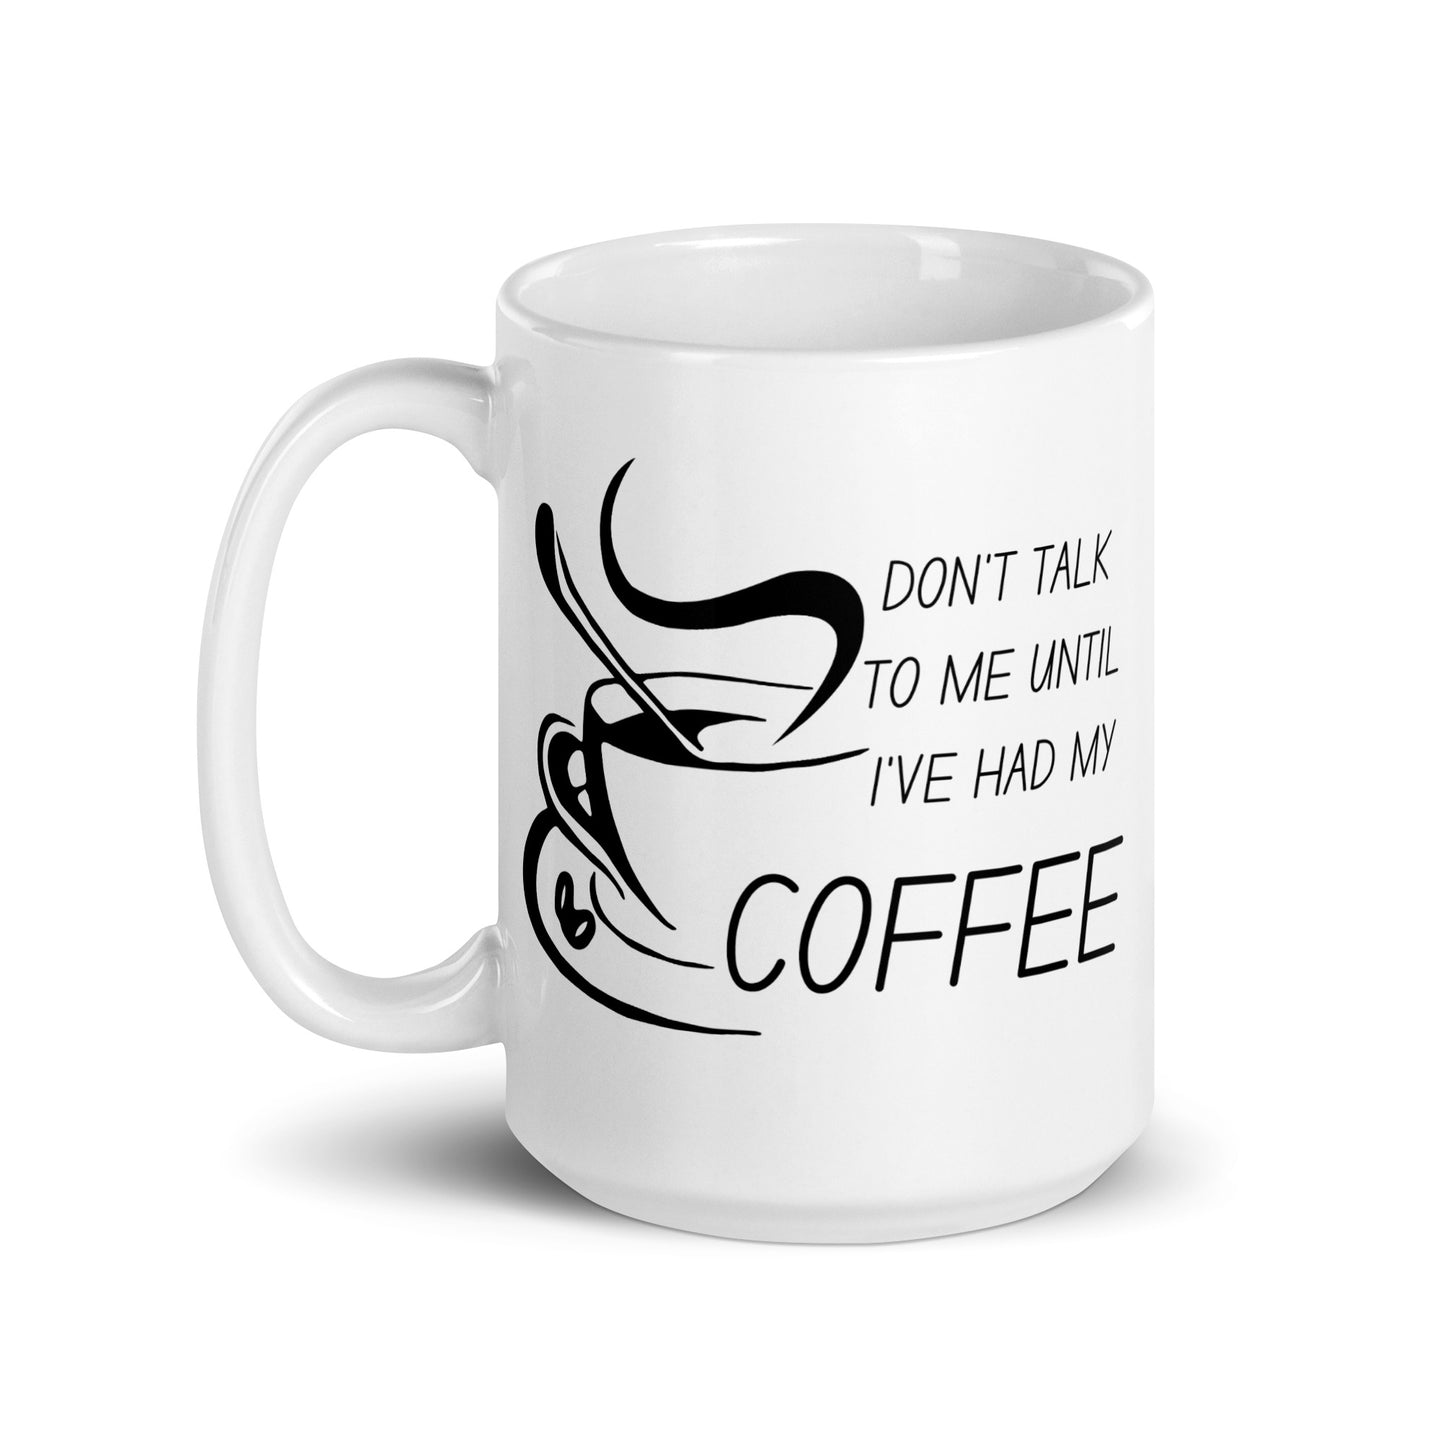 Don't talk until I've had coffee White glossy mug